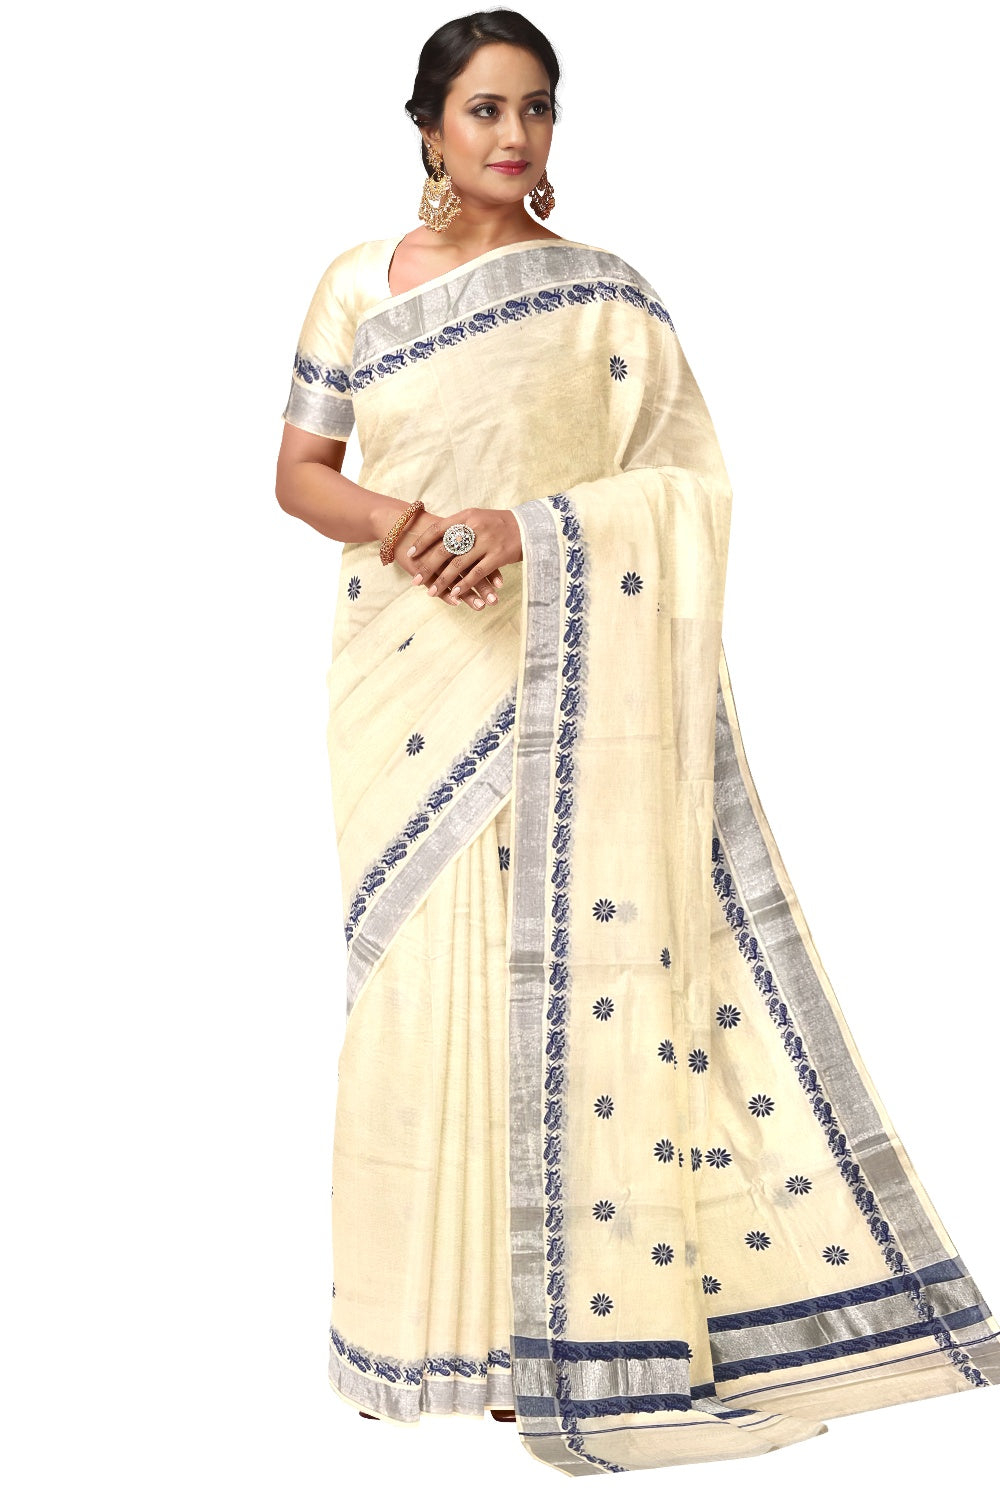 Pure Cotton Kerala Saree with Blue Block Printed Floral Design and Silver Kasavu Border